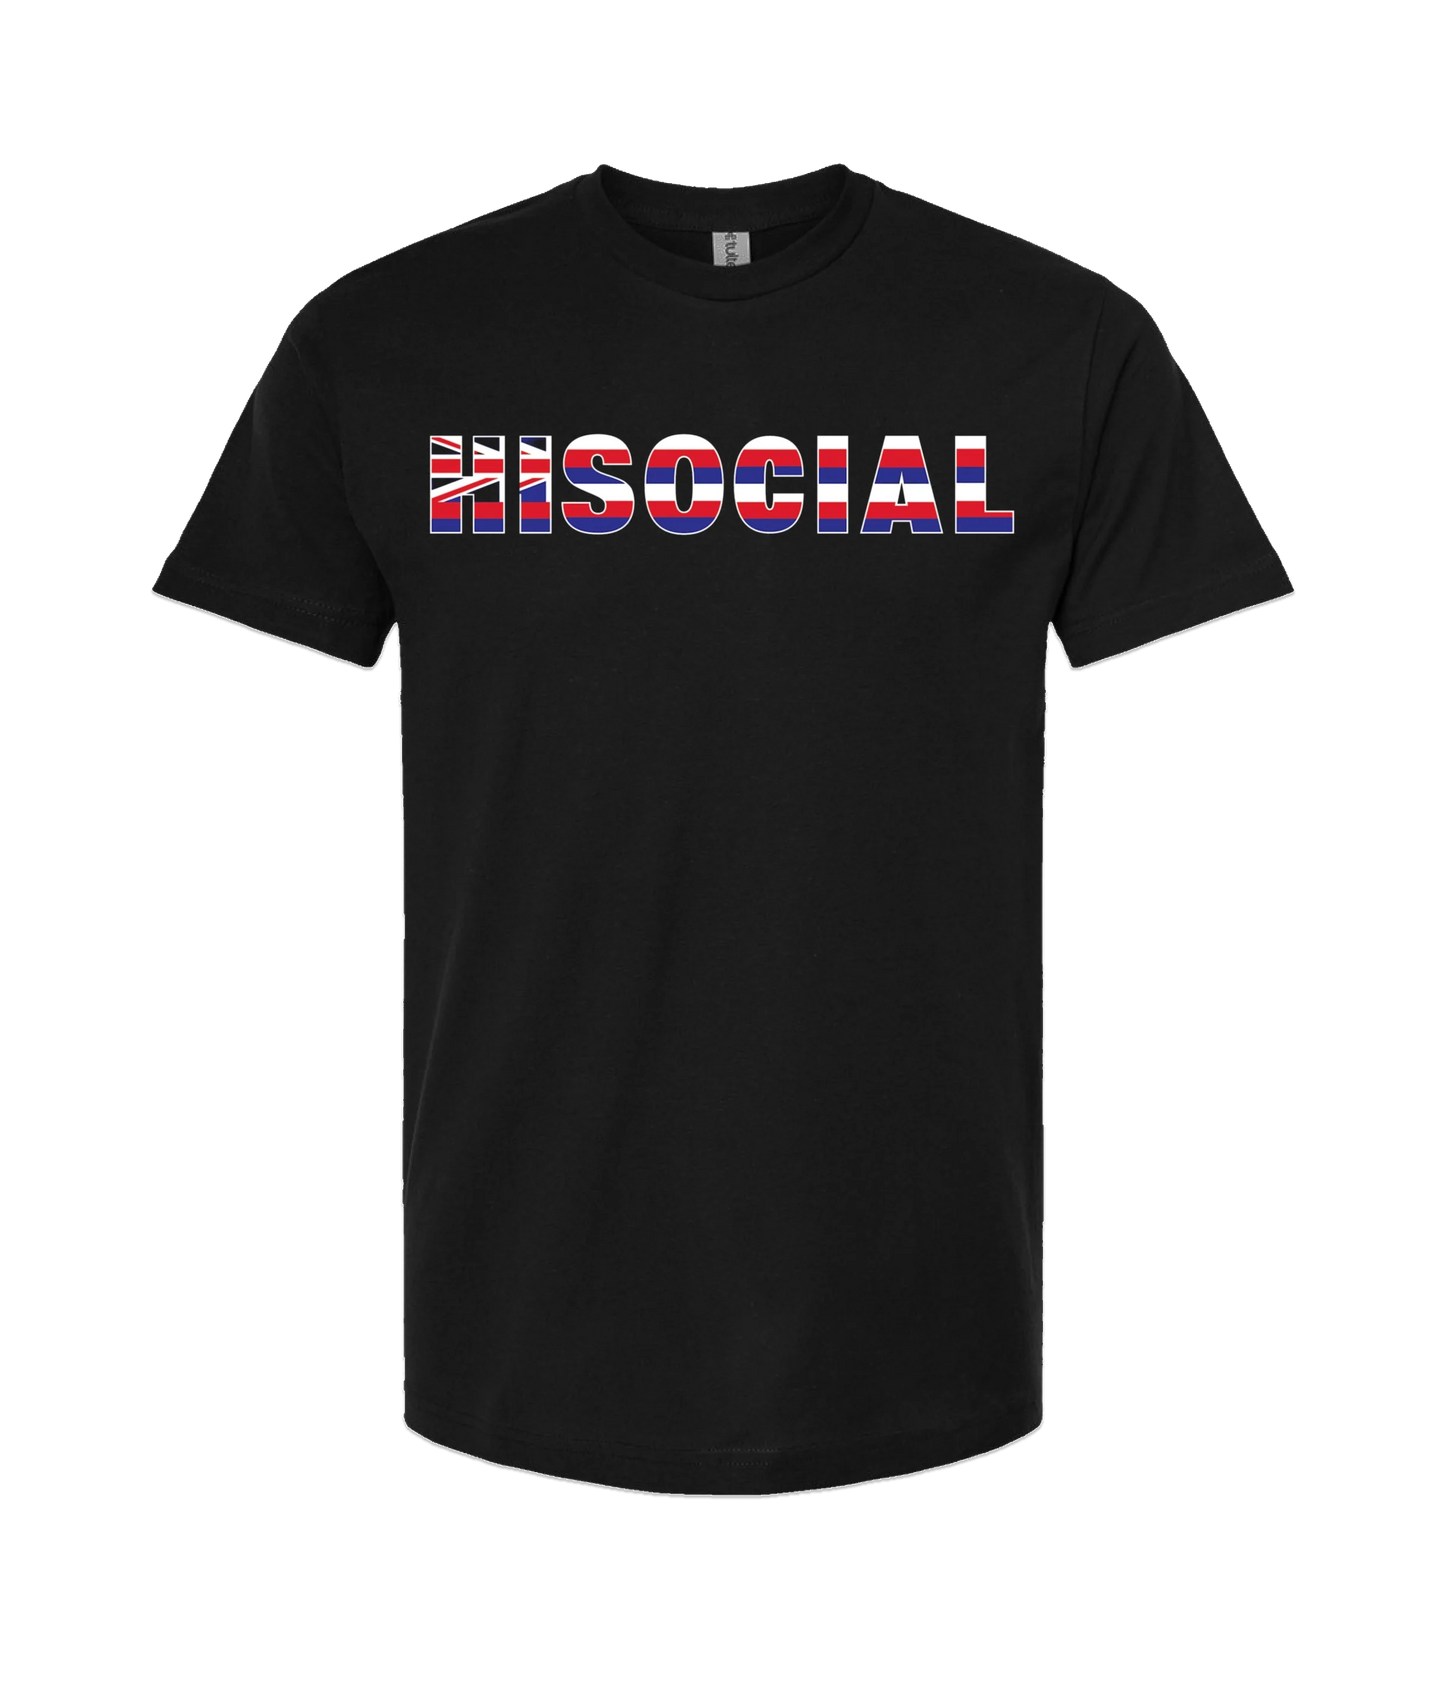 HiSocial - Logo 2 - Black T Shirt